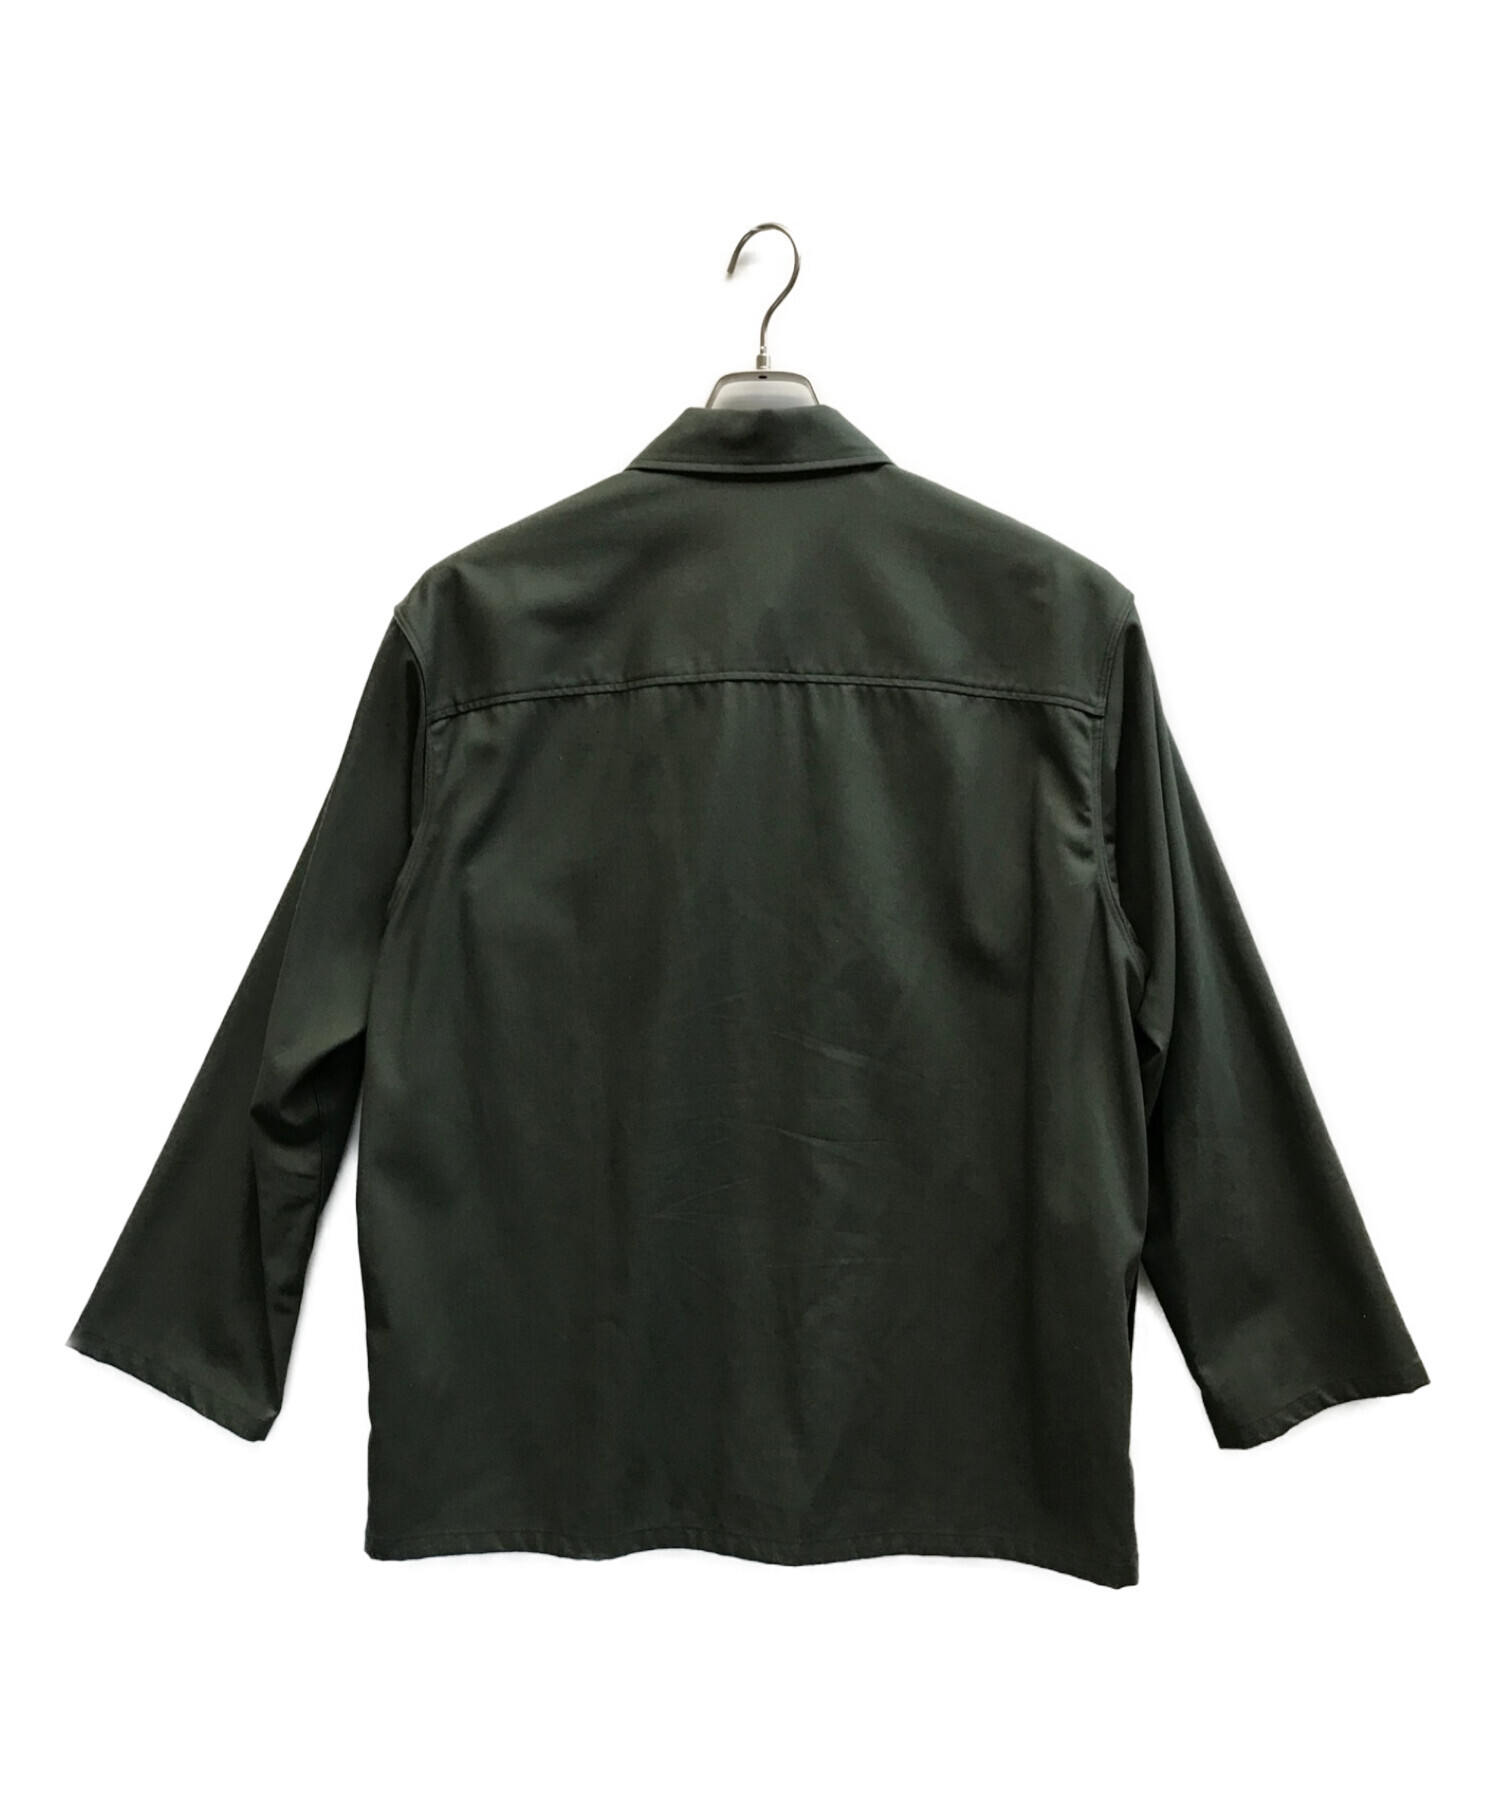 Graphpaper (グラフペーパー) Wooly Cotton Military Jacket / ウーリーコットンミリタリージャケット カーキ  サイズ:1